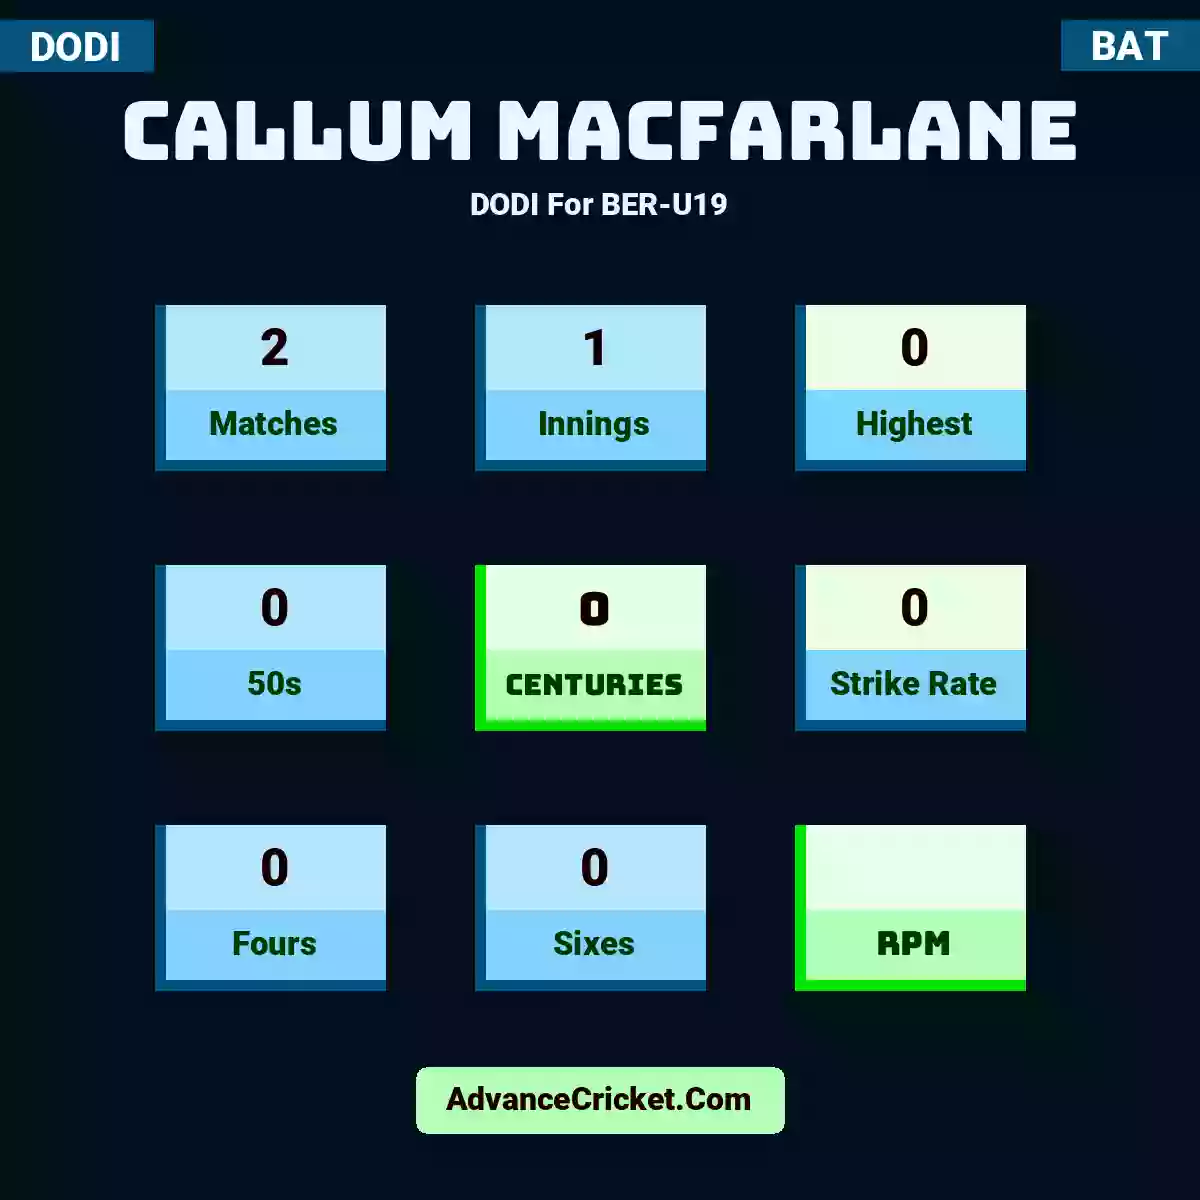 Callum MacFarlane DODI  For BER-U19, Callum MacFarlane played 2 matches, scored 0 runs as highest, 0 half-centuries, and 0 centuries, with a strike rate of 0. C.MacFarlane hit 0 fours and 0 sixes.